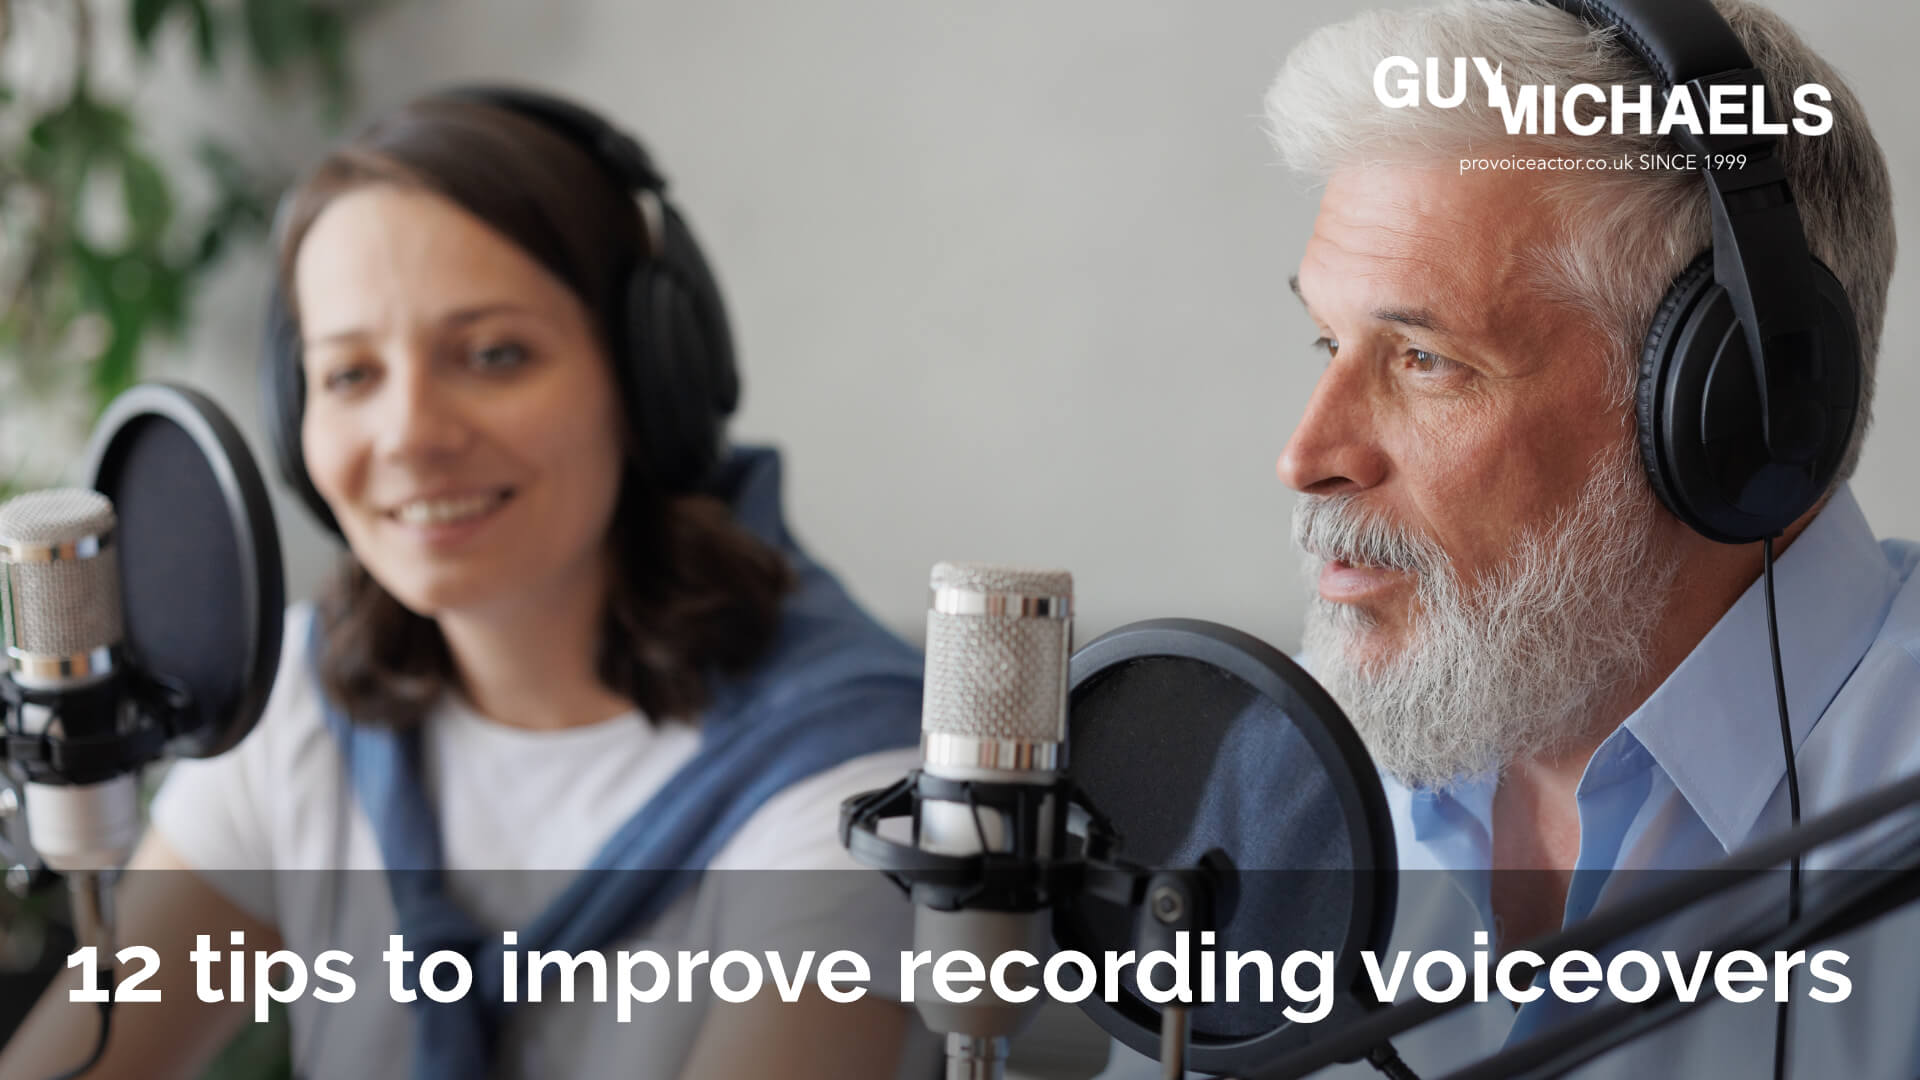 Recording voiceovers